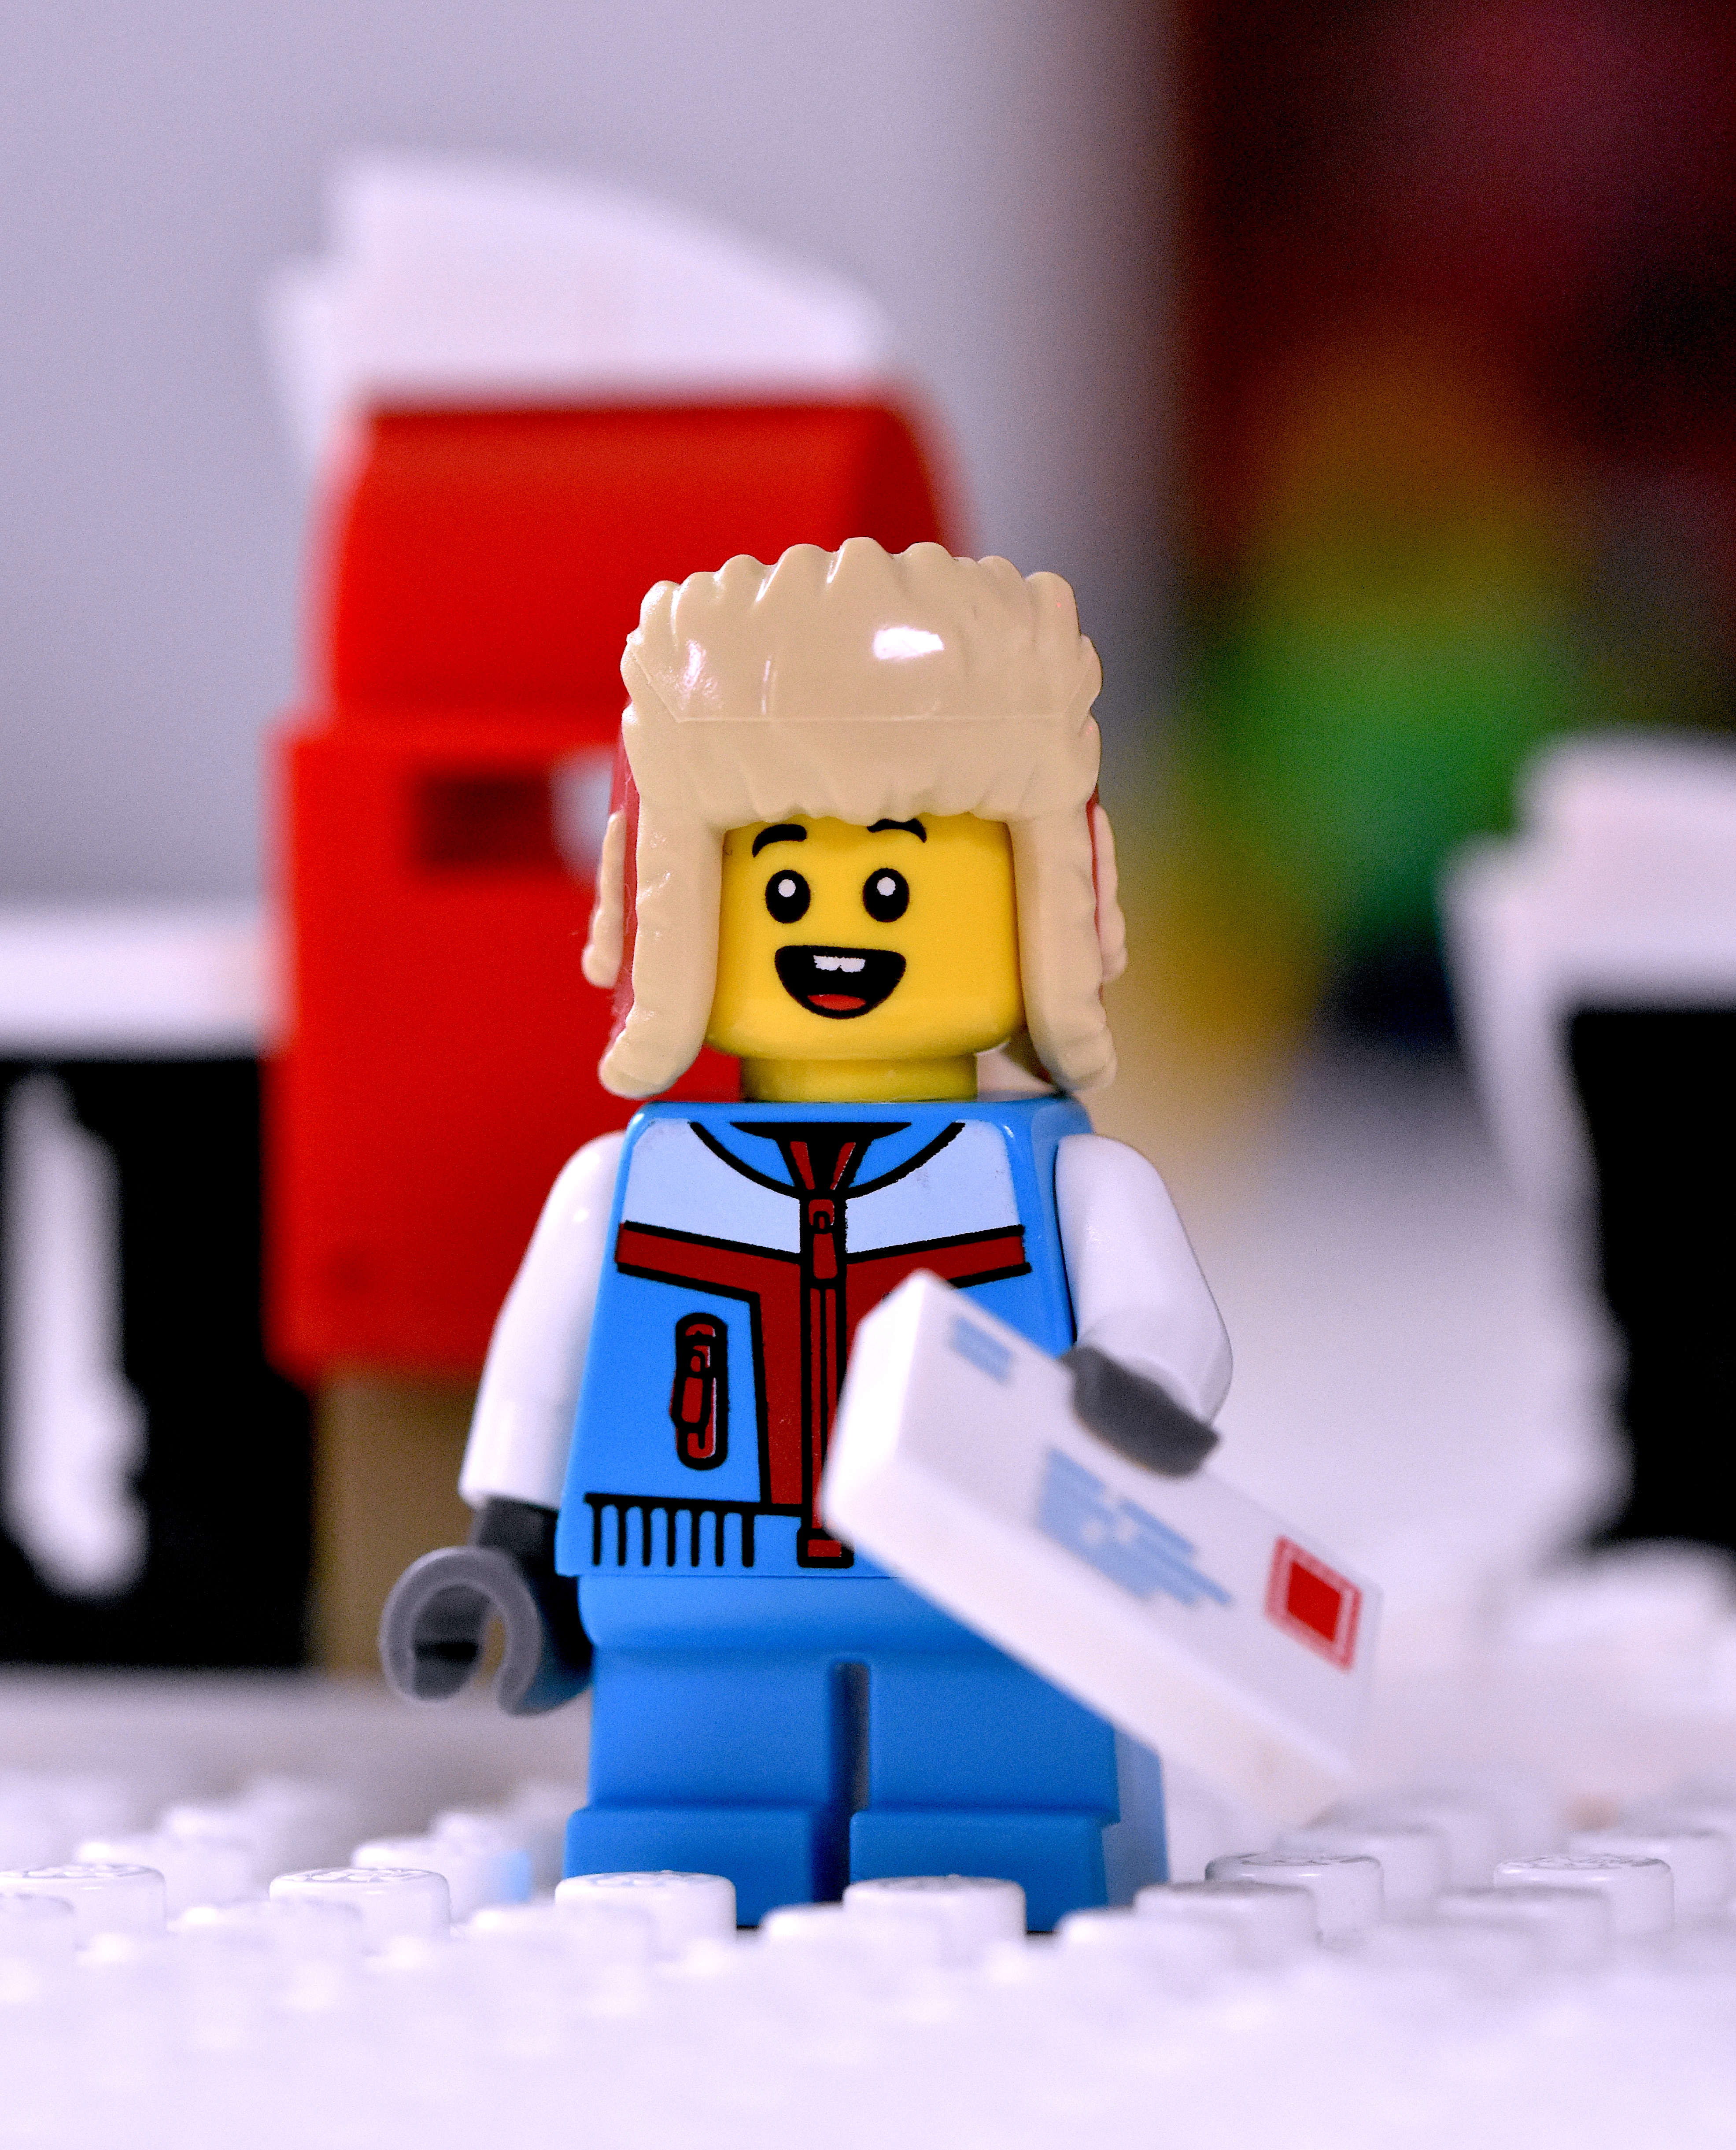 A Lego boy minifigure from the Holiday Main Street Christmas set